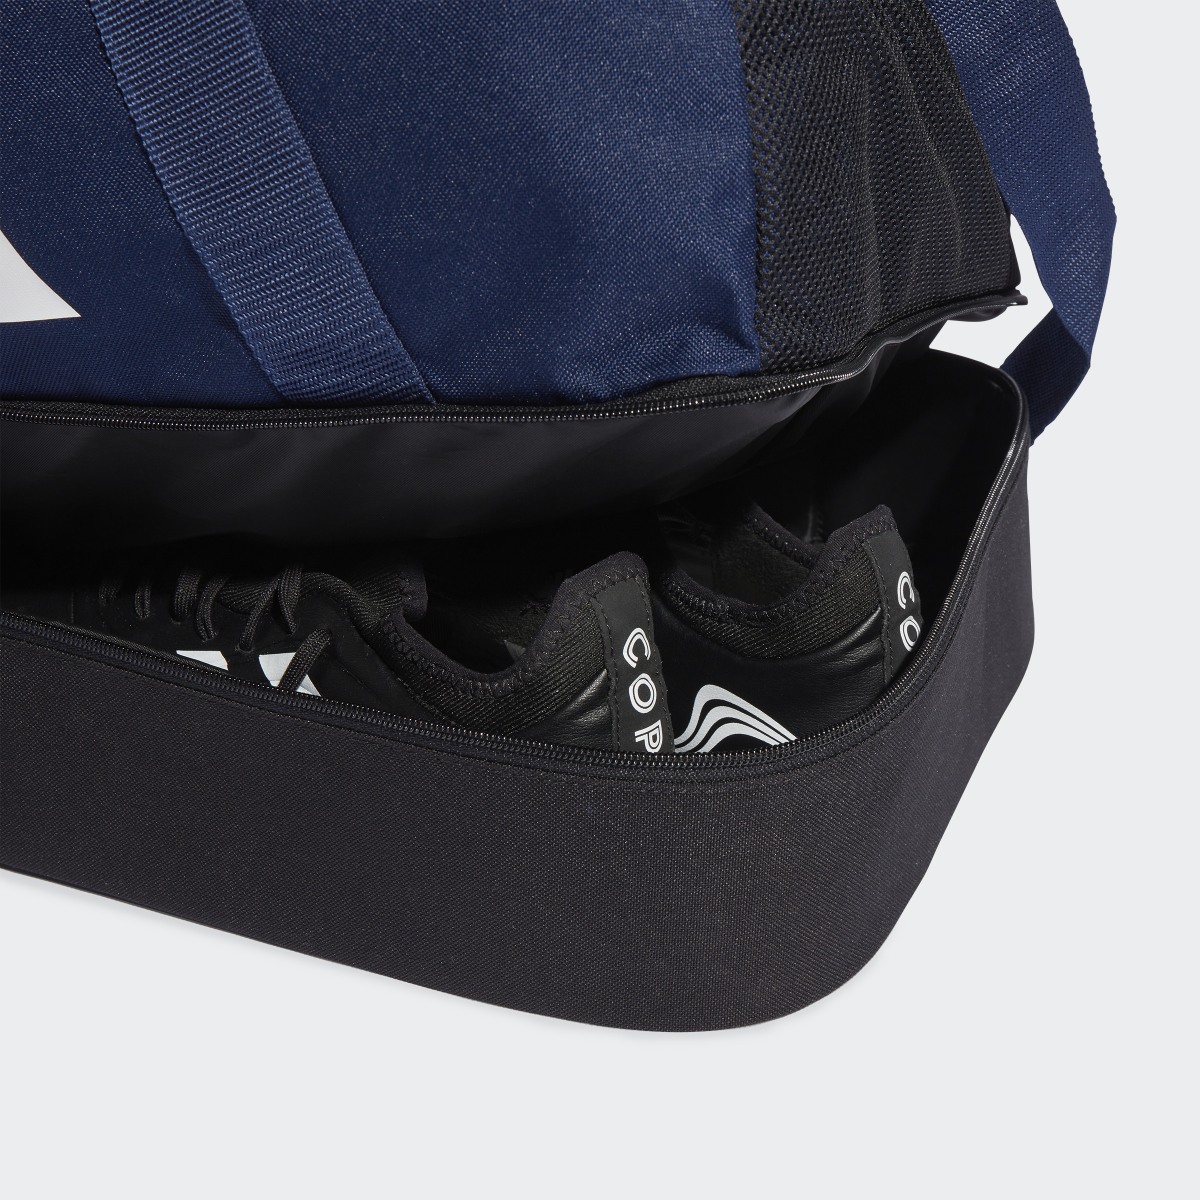 Adidas Tiro League Duffel Bag Small. 7